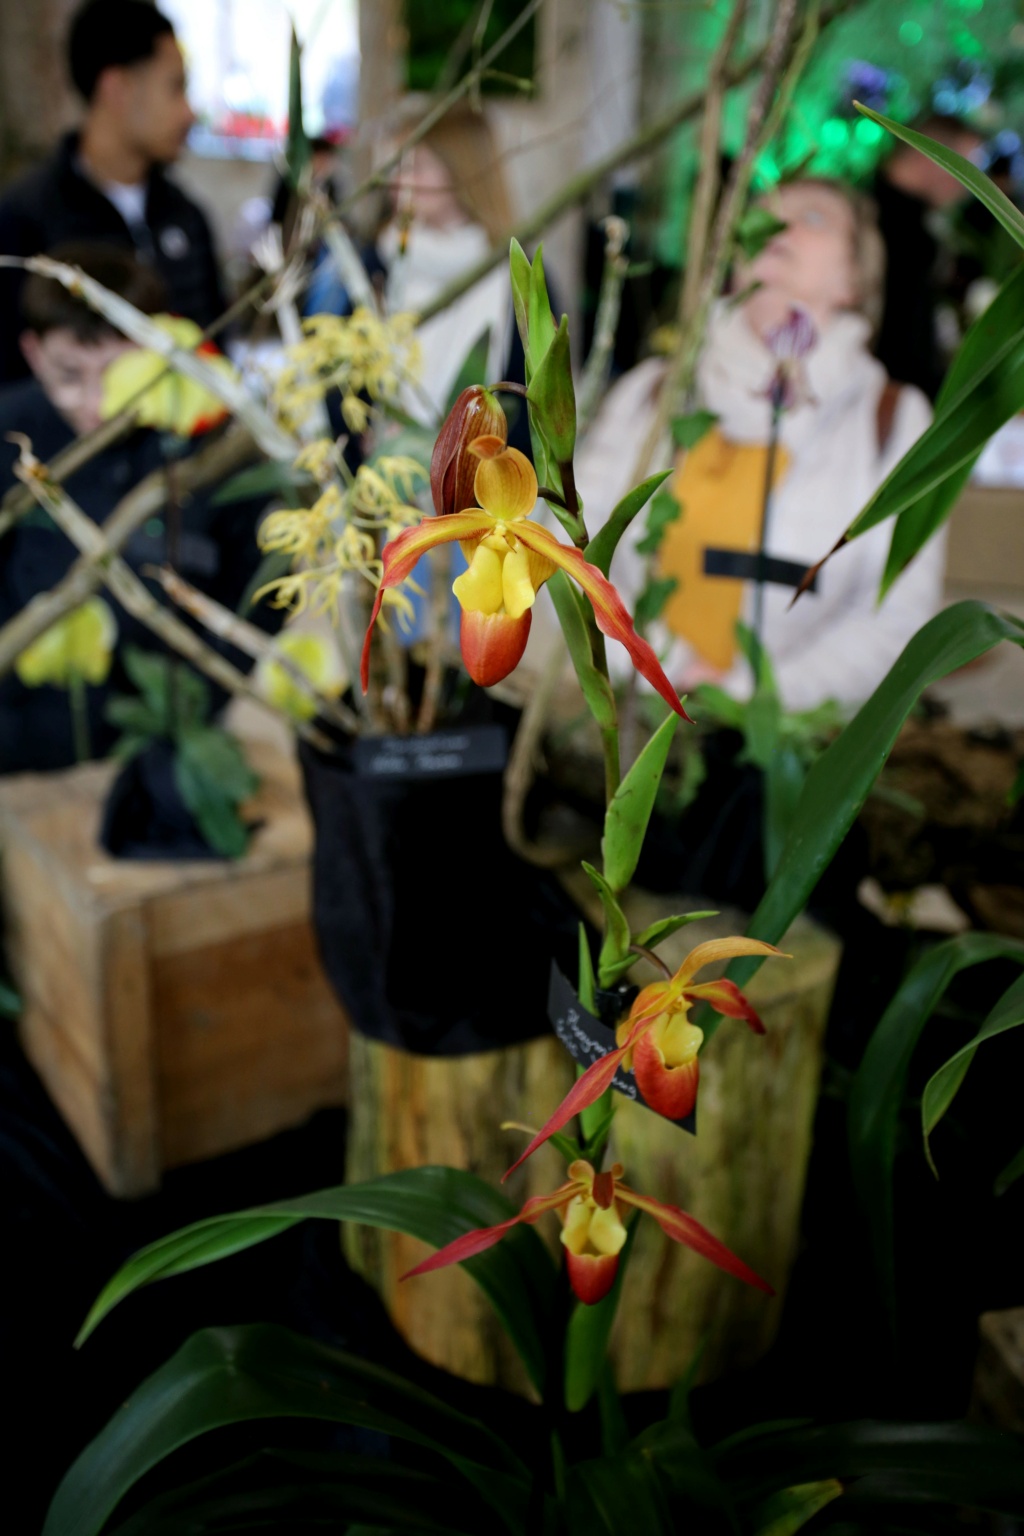 exposition orchidee de vaucelles Img_8941